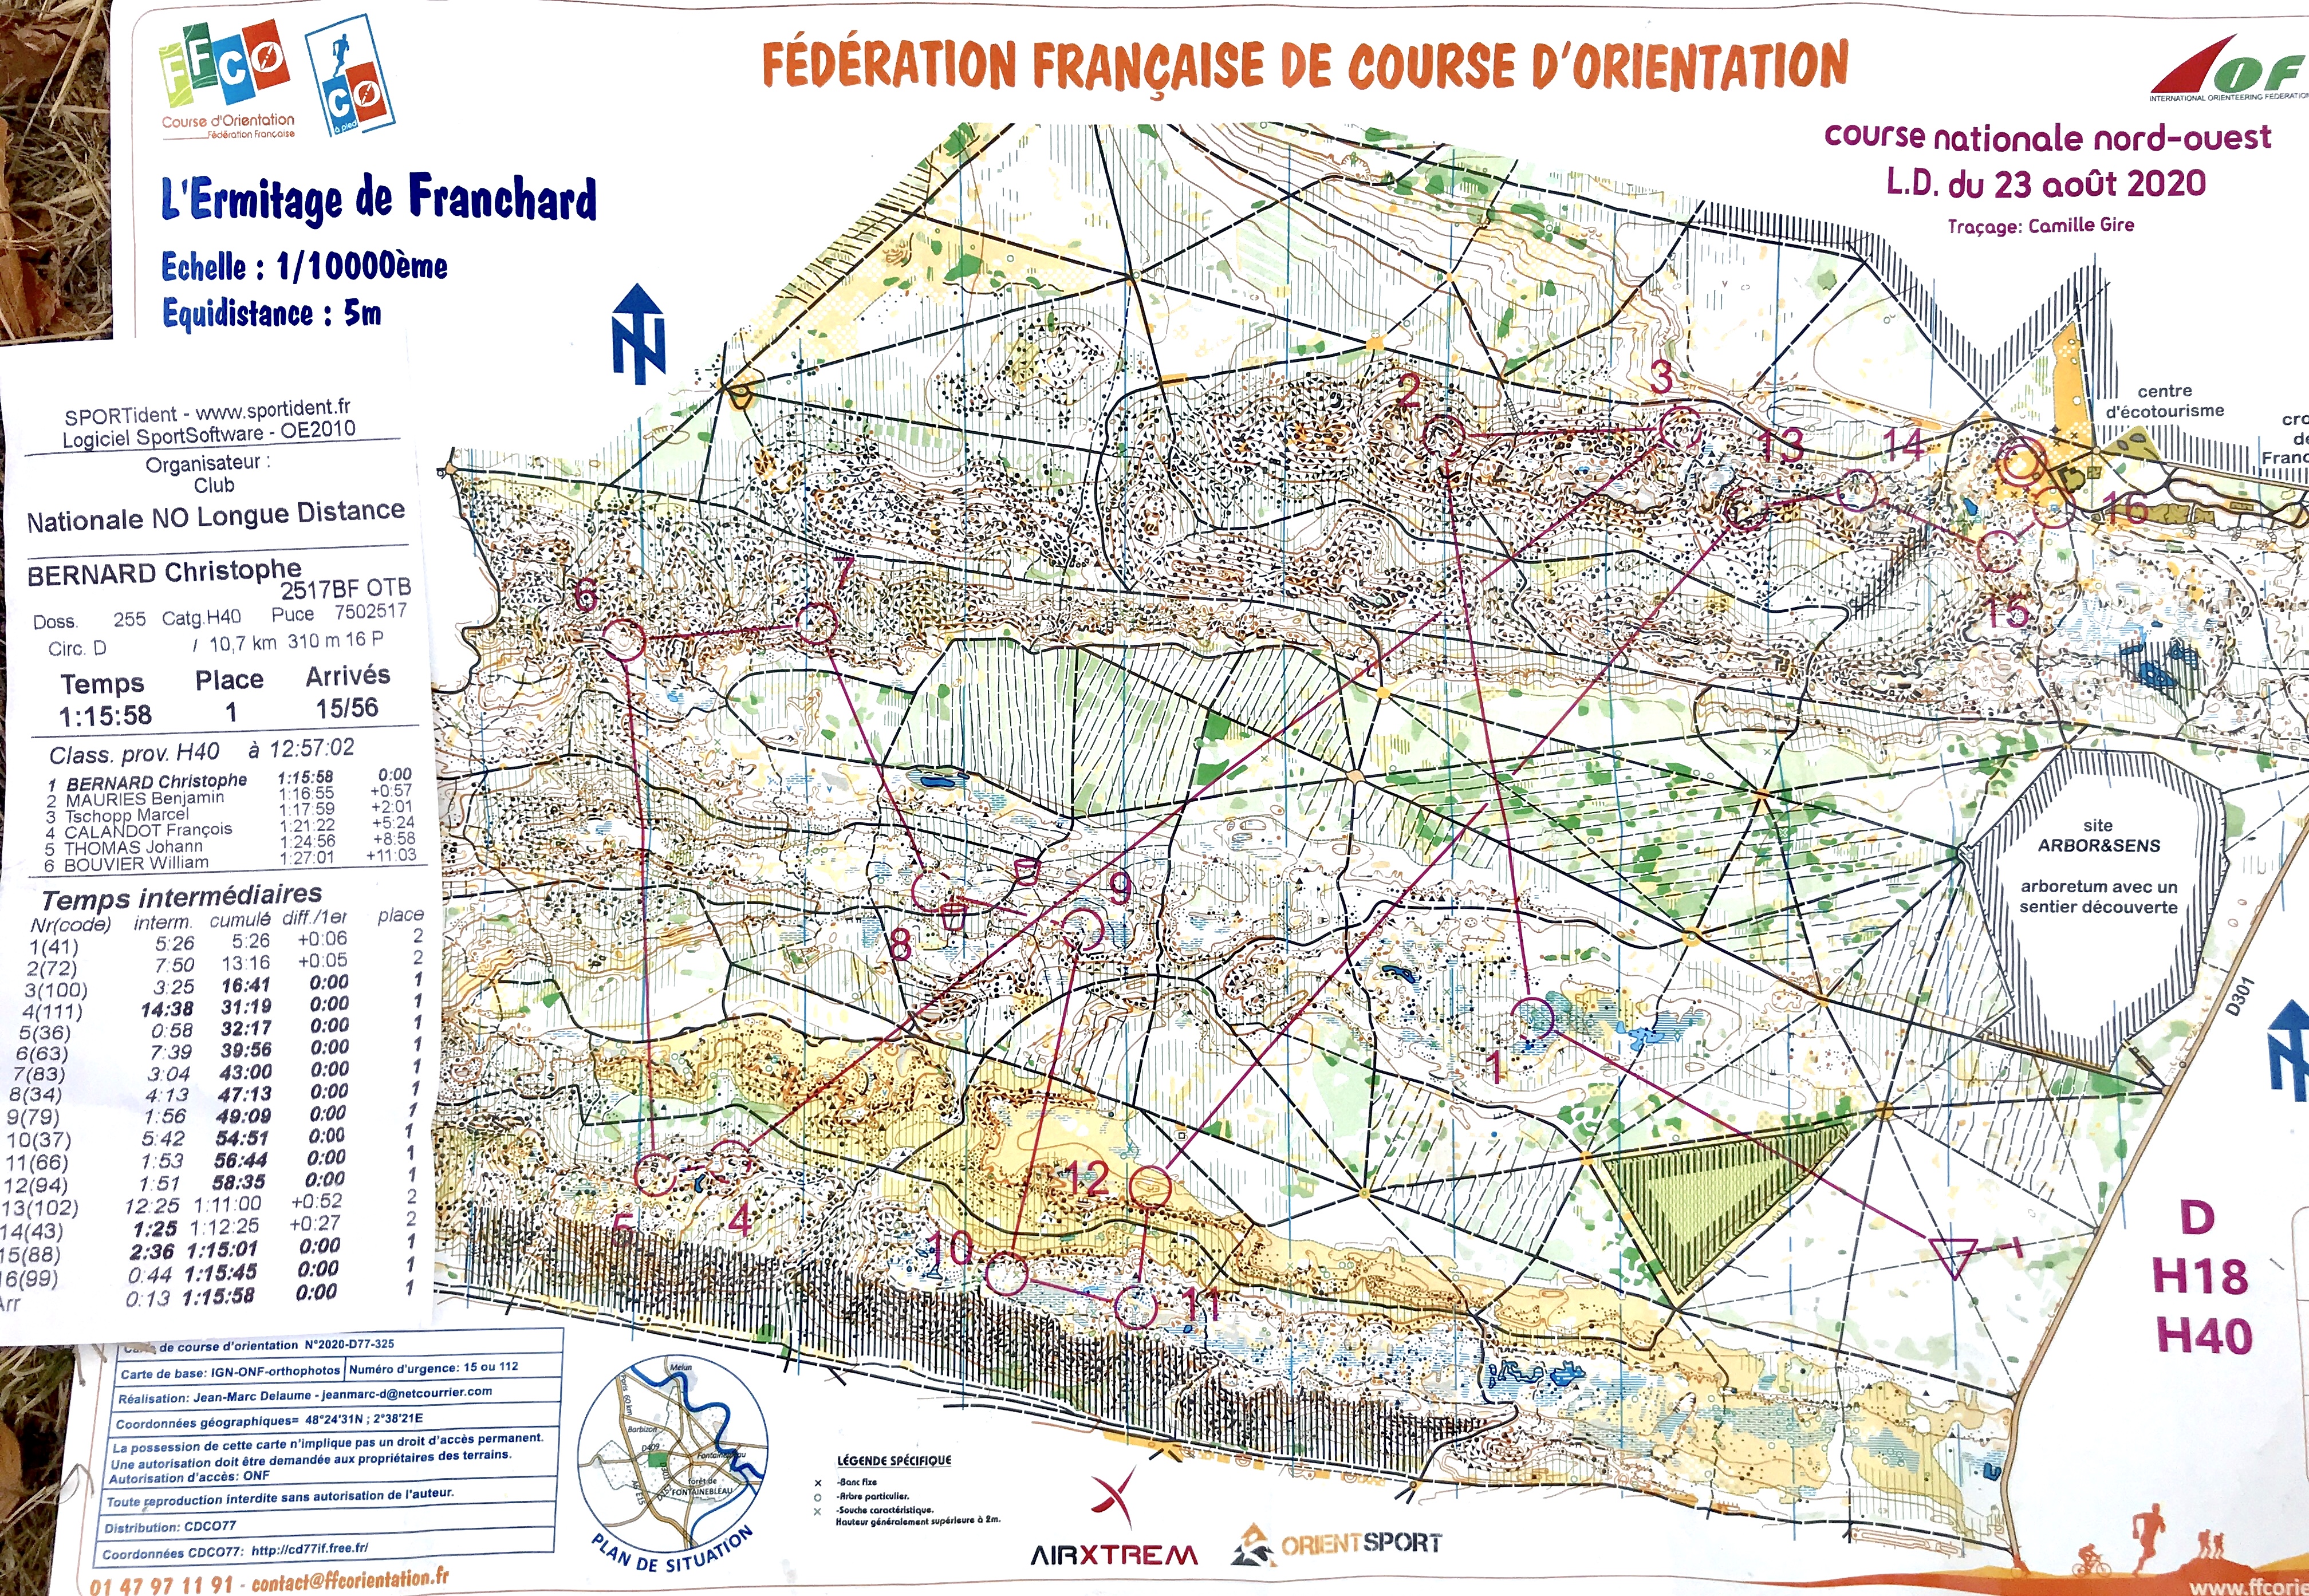 Nationale NO LD - Fontainebleau (23-08-2020)